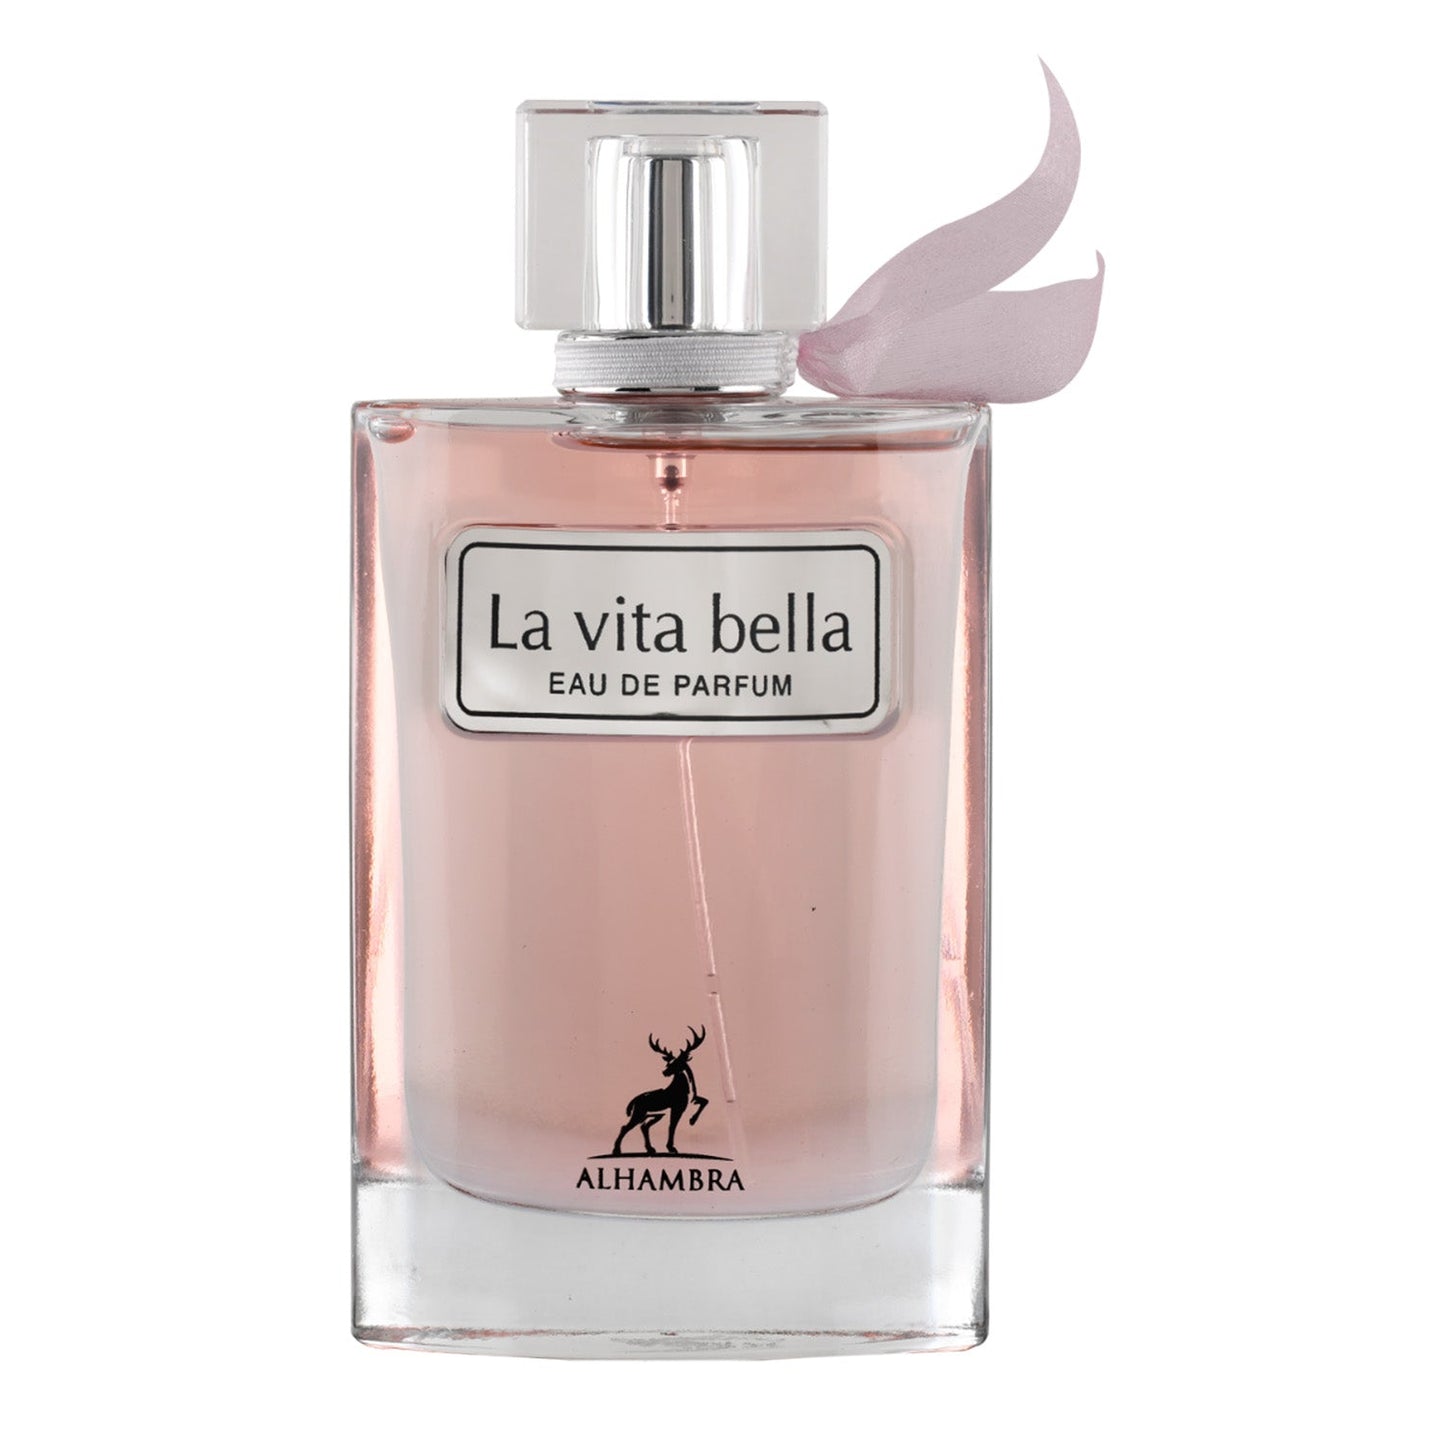 La Vita Bella Eau De Parfum 100ml Alhambra-Perfume Heaven